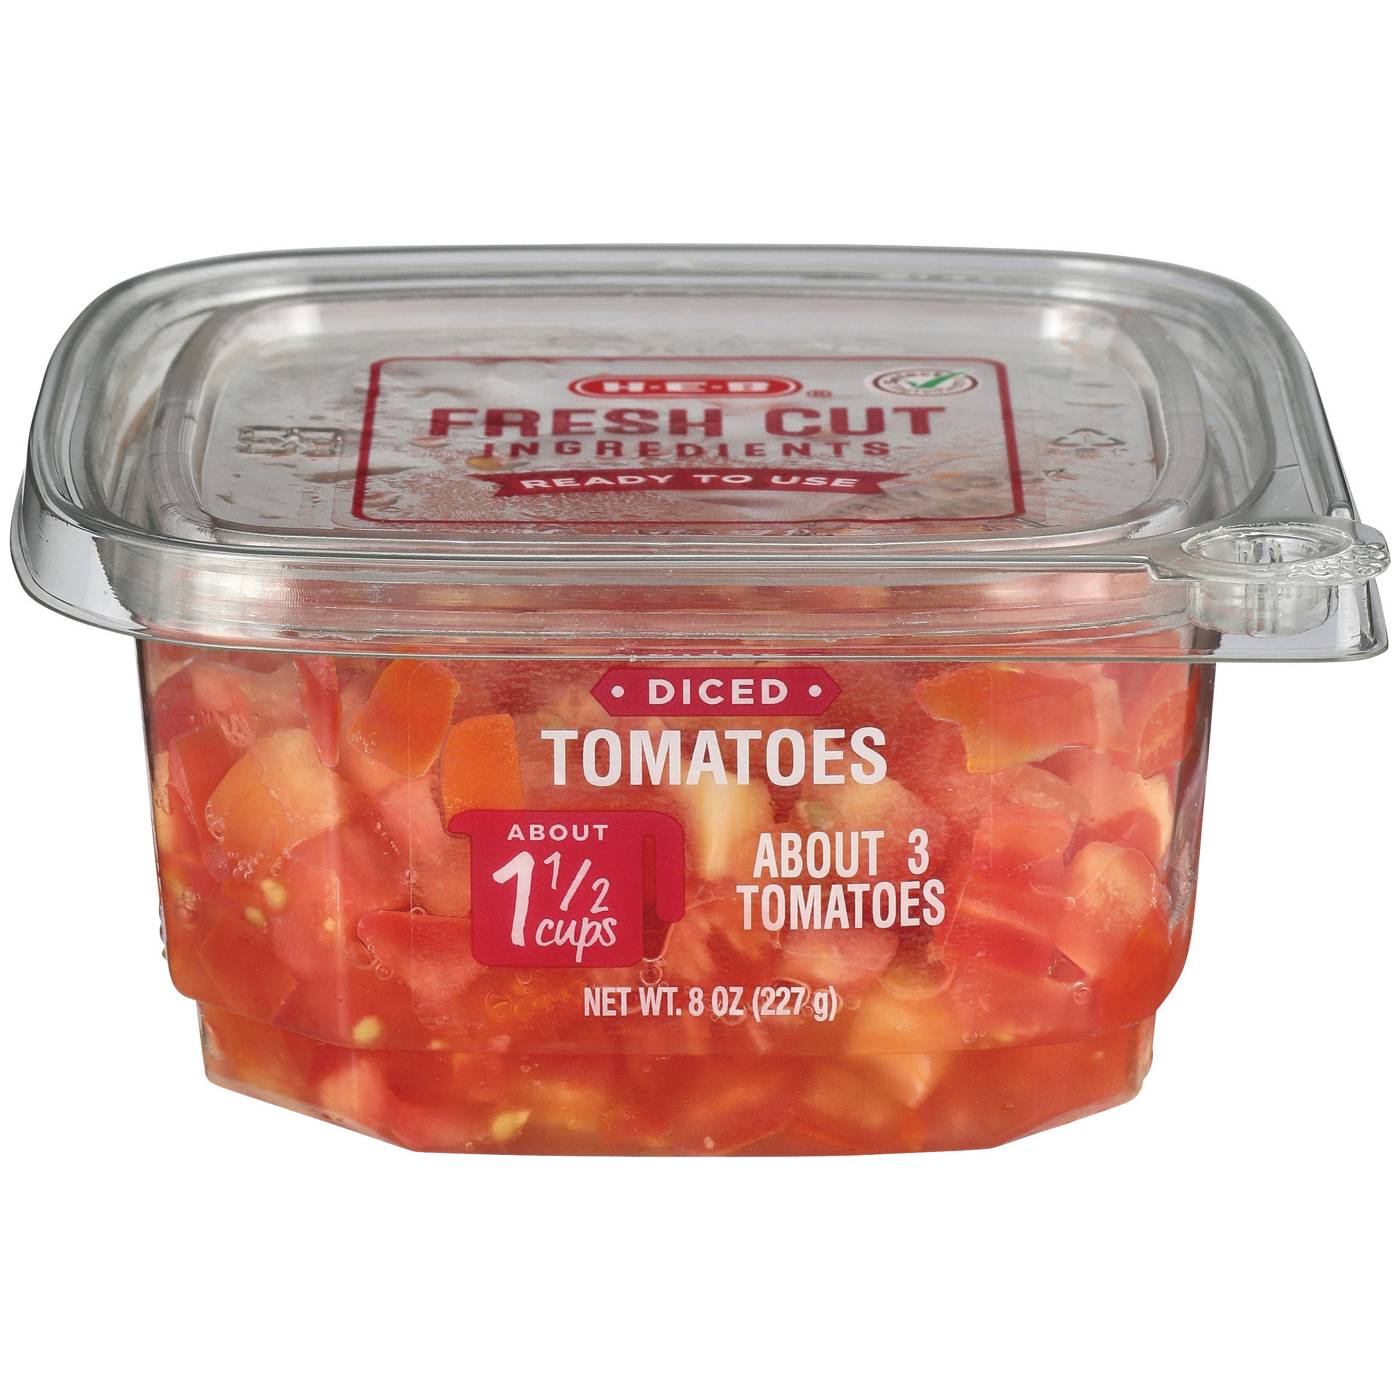 H-E-B Fresh Diced Tomatoes; image 1 of 2